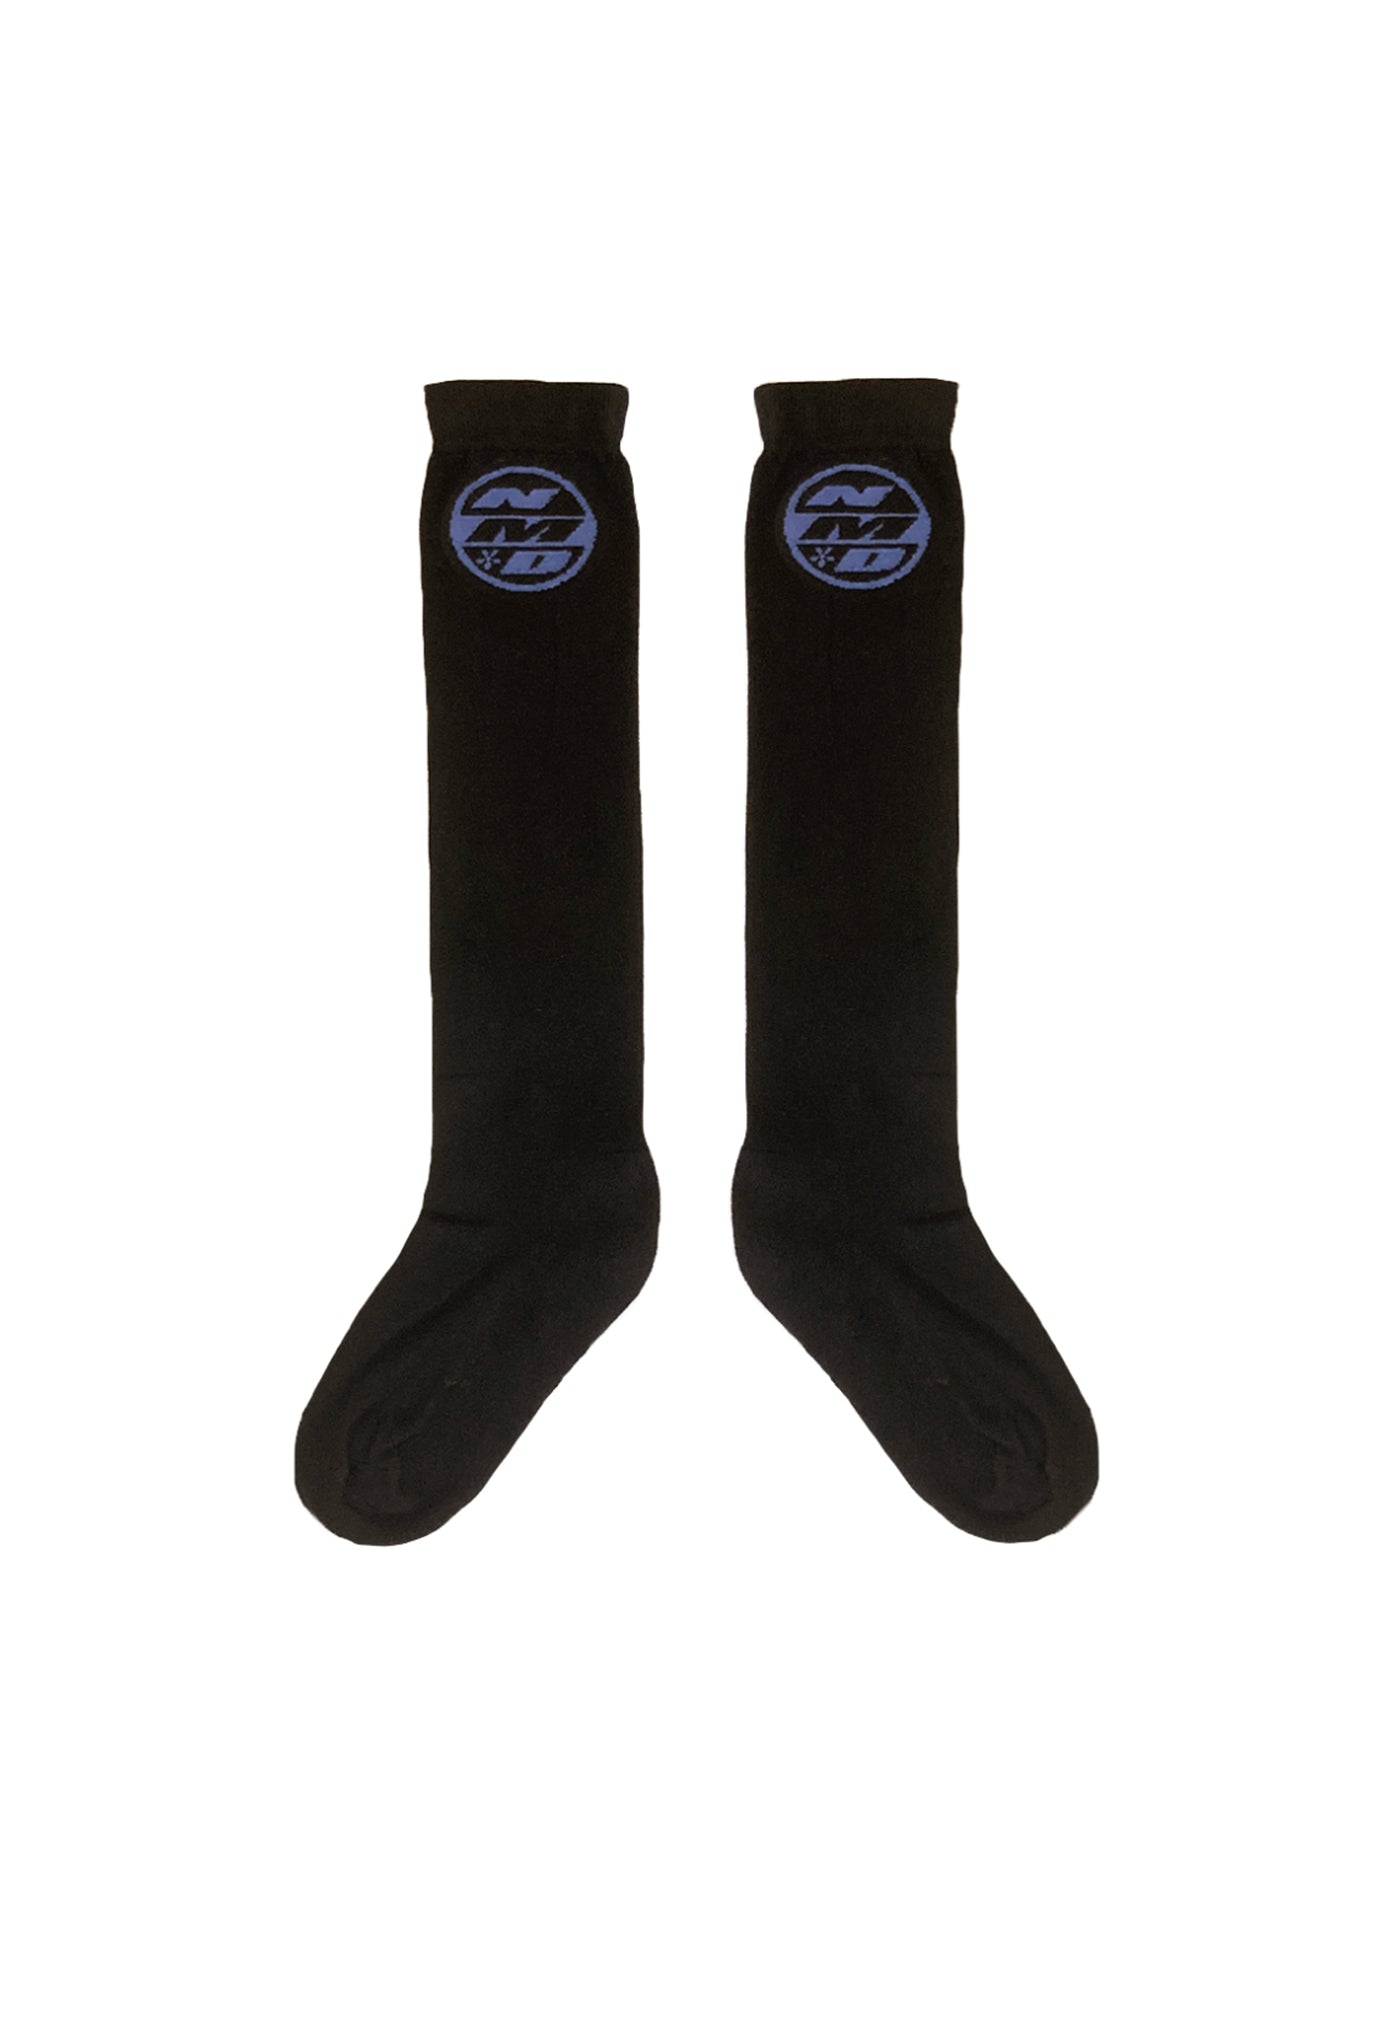 Tall NMD Socks - Black/Blue sold by Angel Divine